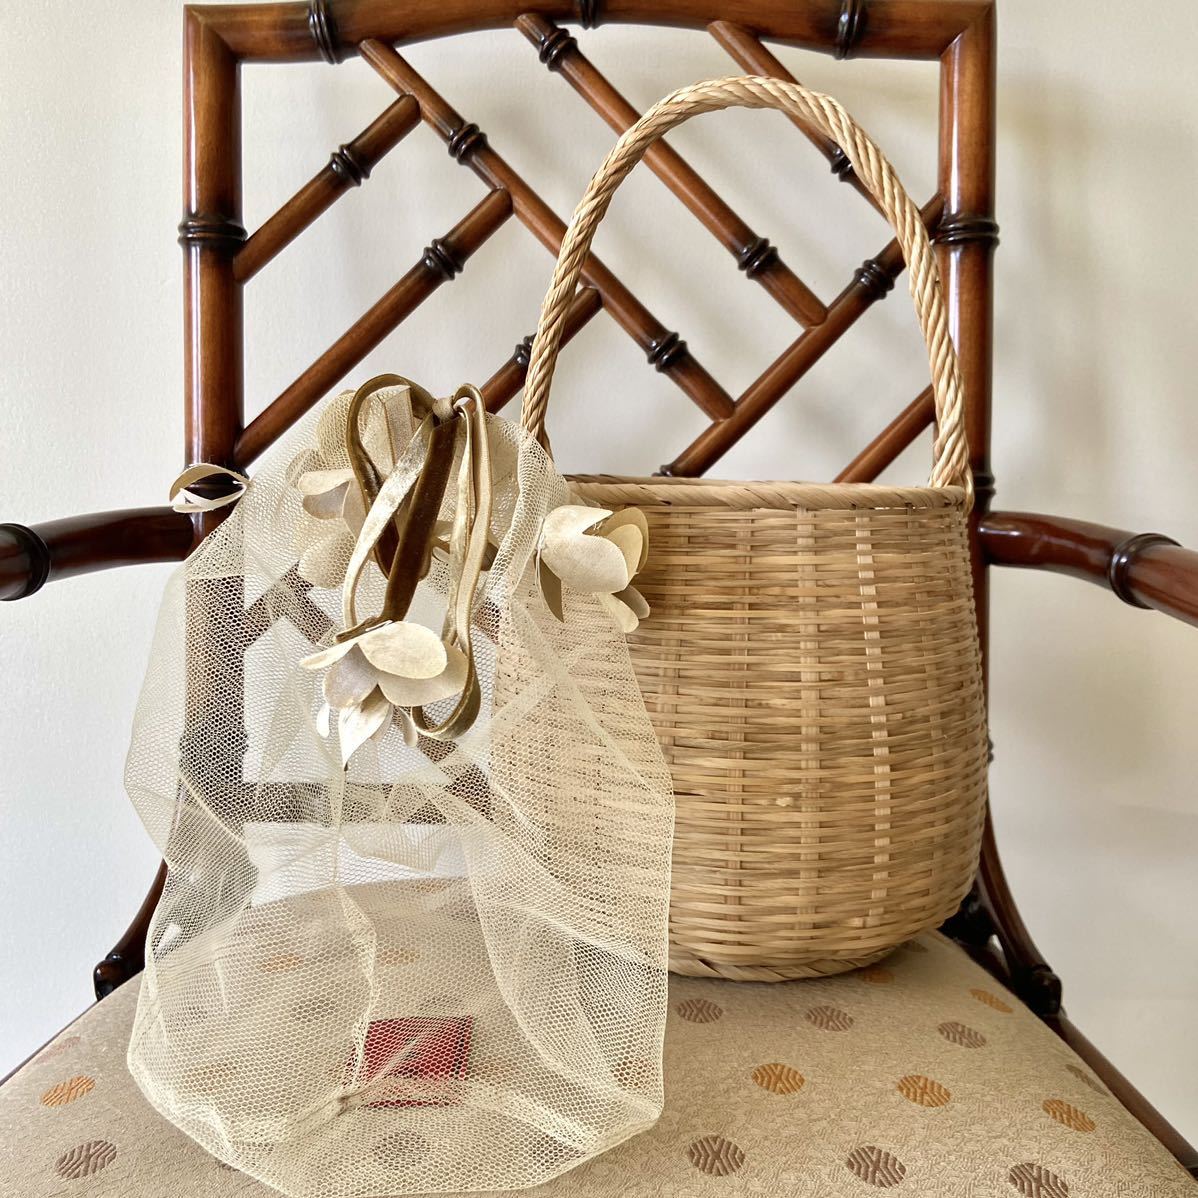 Sugri basket bag basket bag bamboo. is na basket large butterfly chou butterfly ......